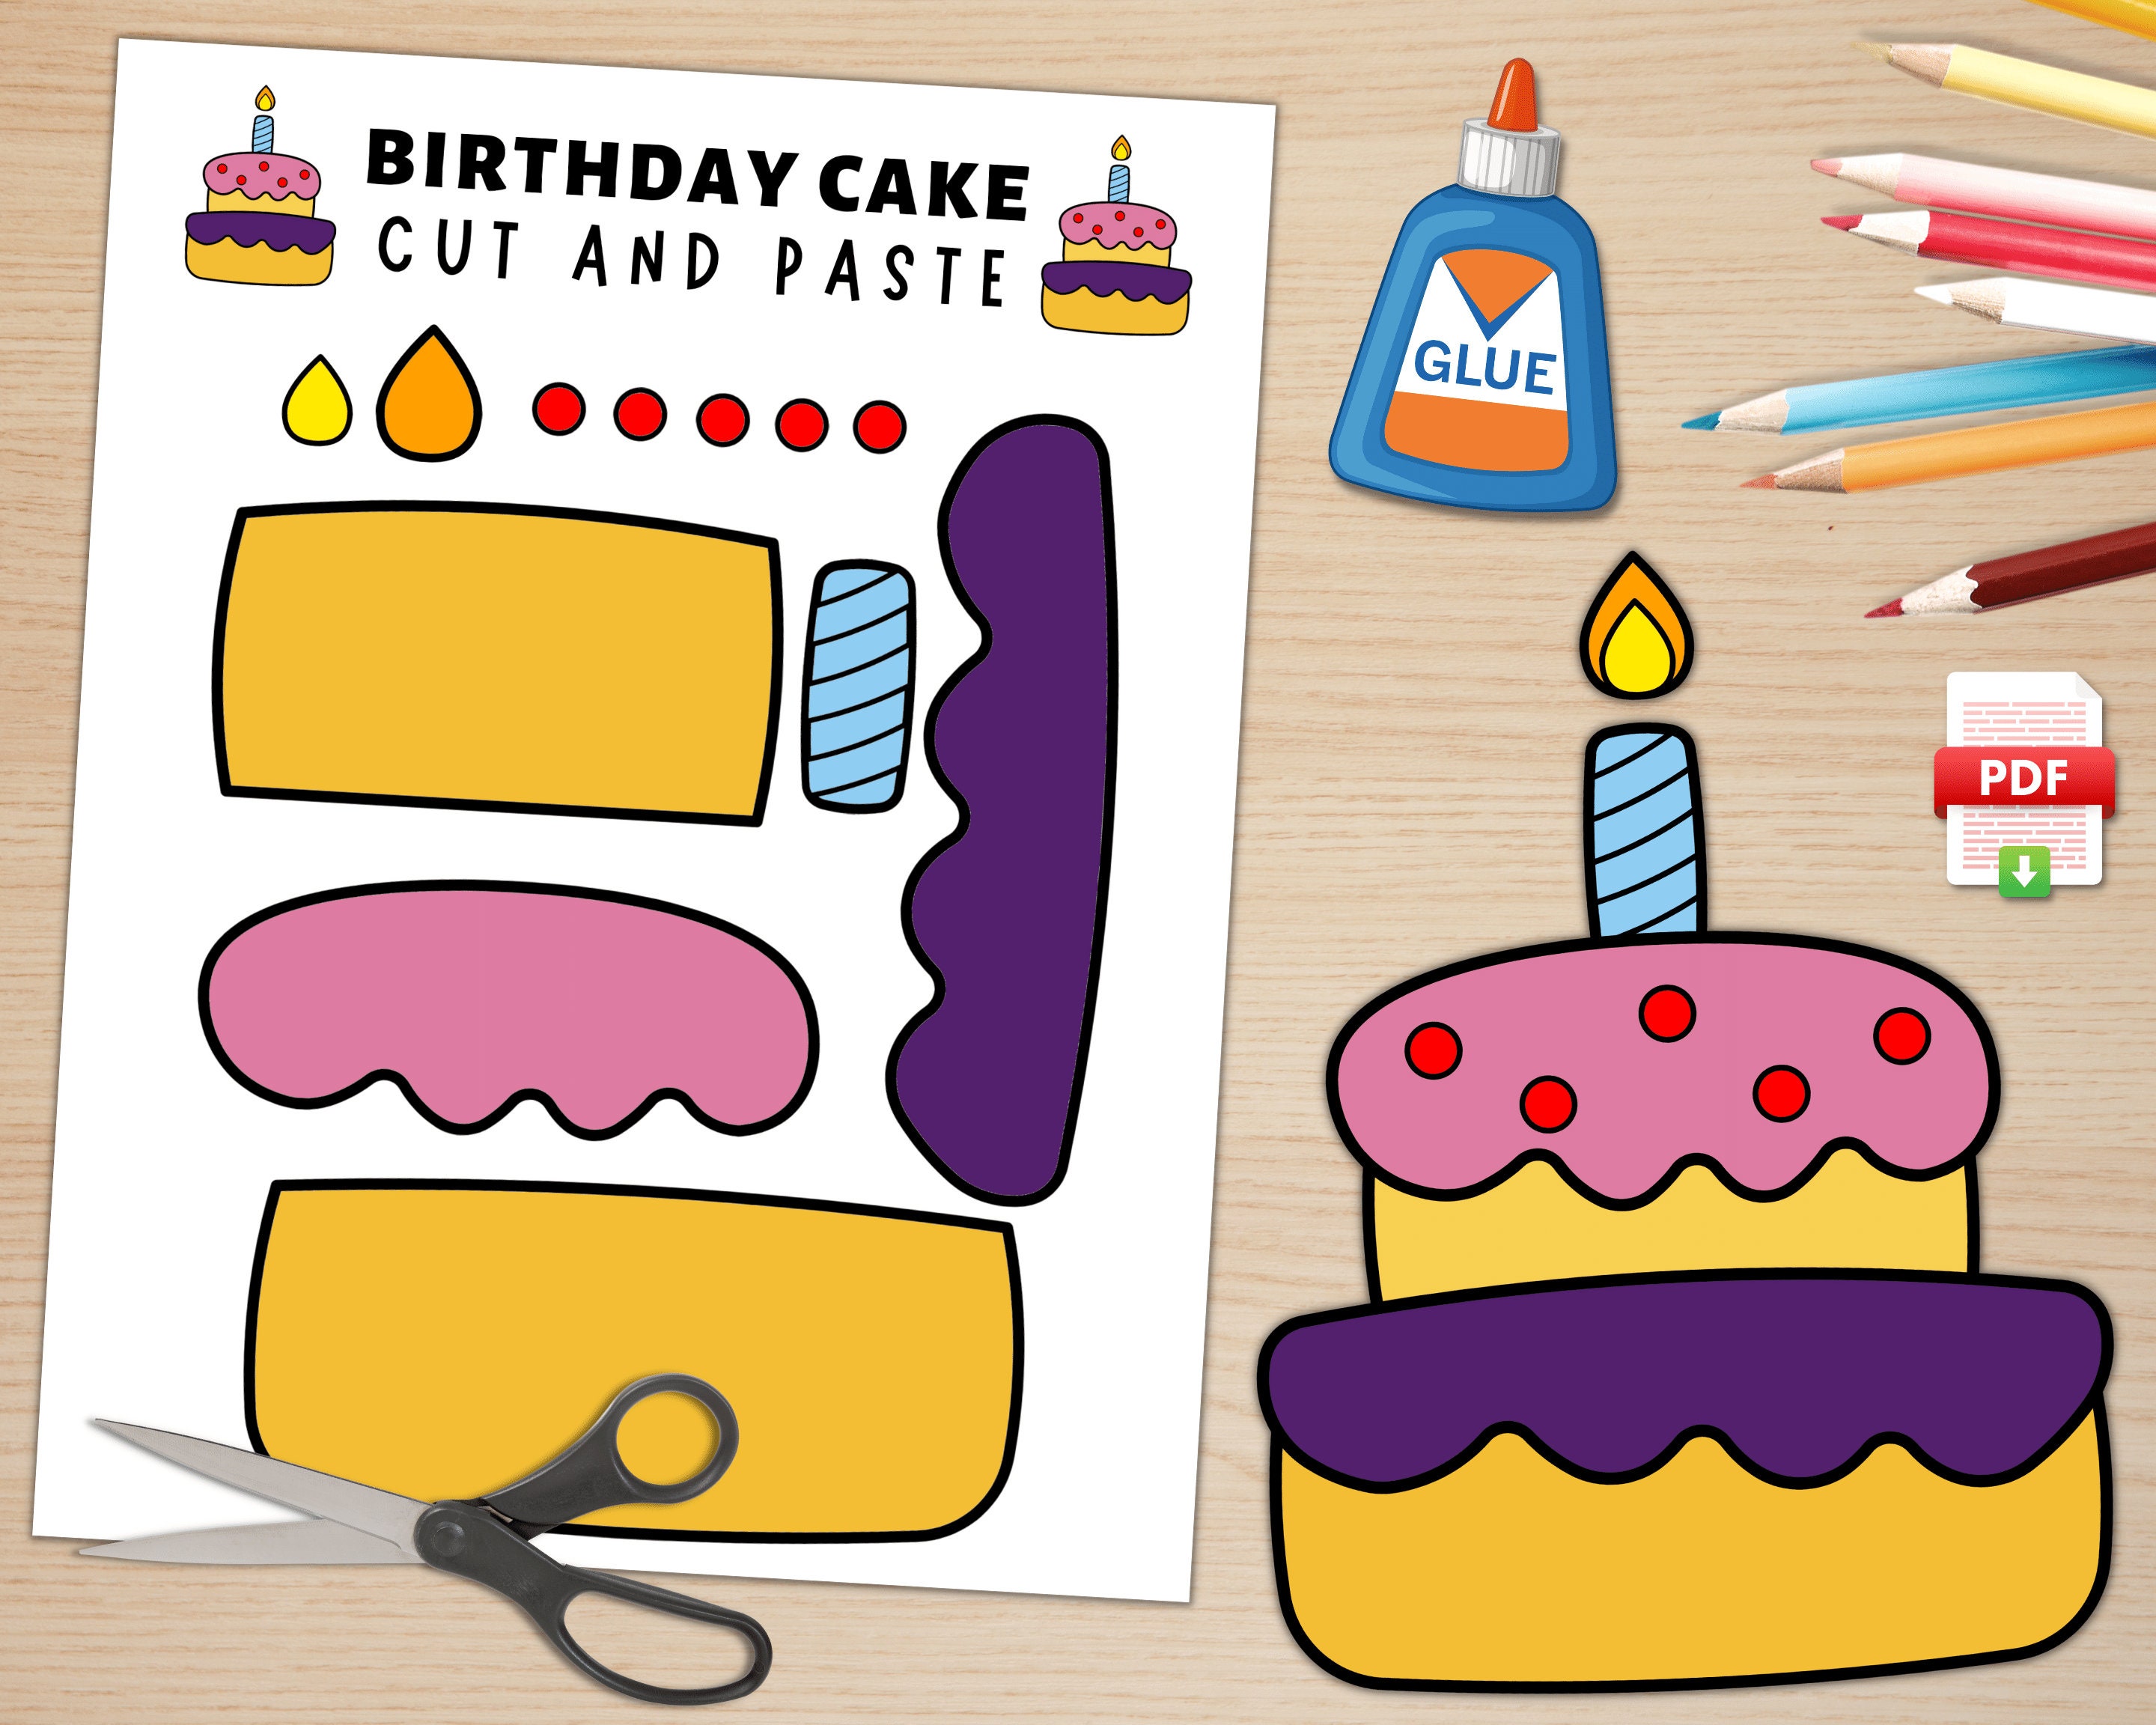 DIY Letter Cake Template - Get Creative!